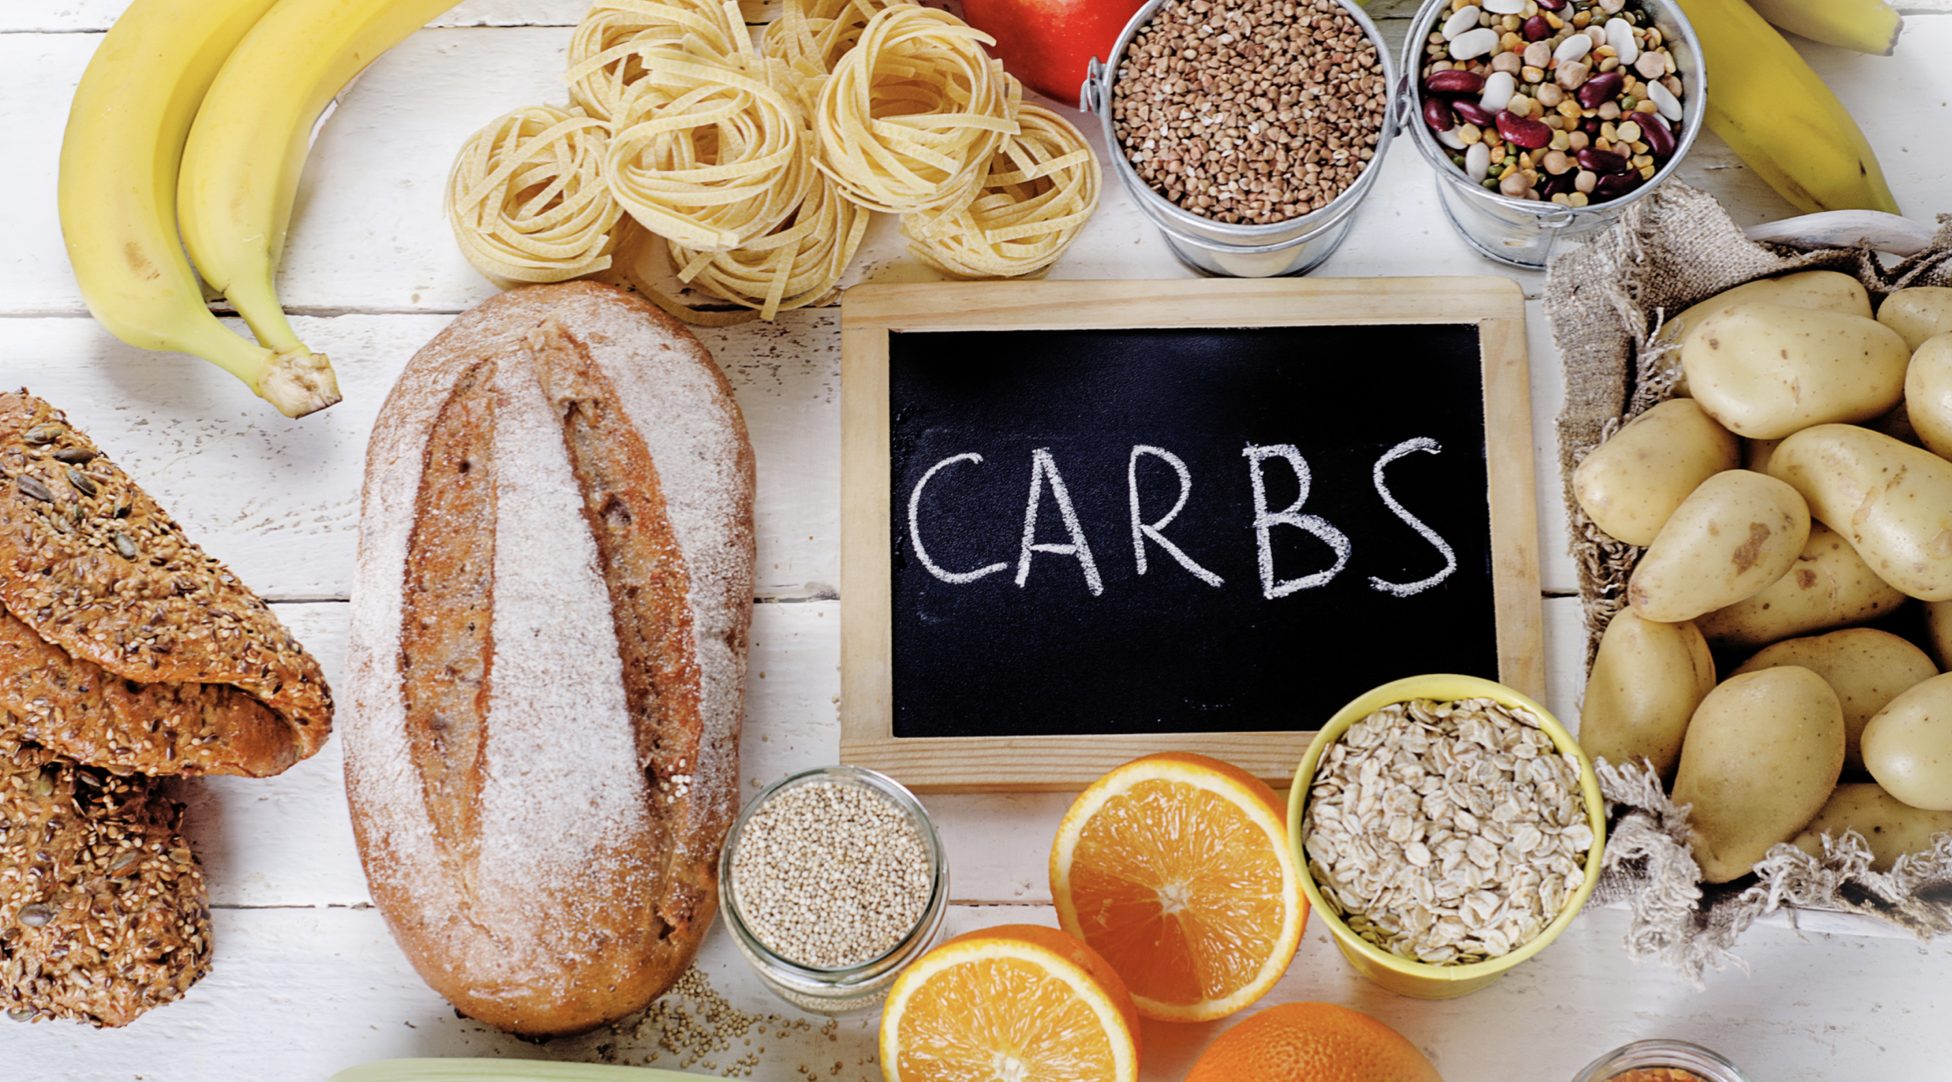 carbs, bread, pasta grains